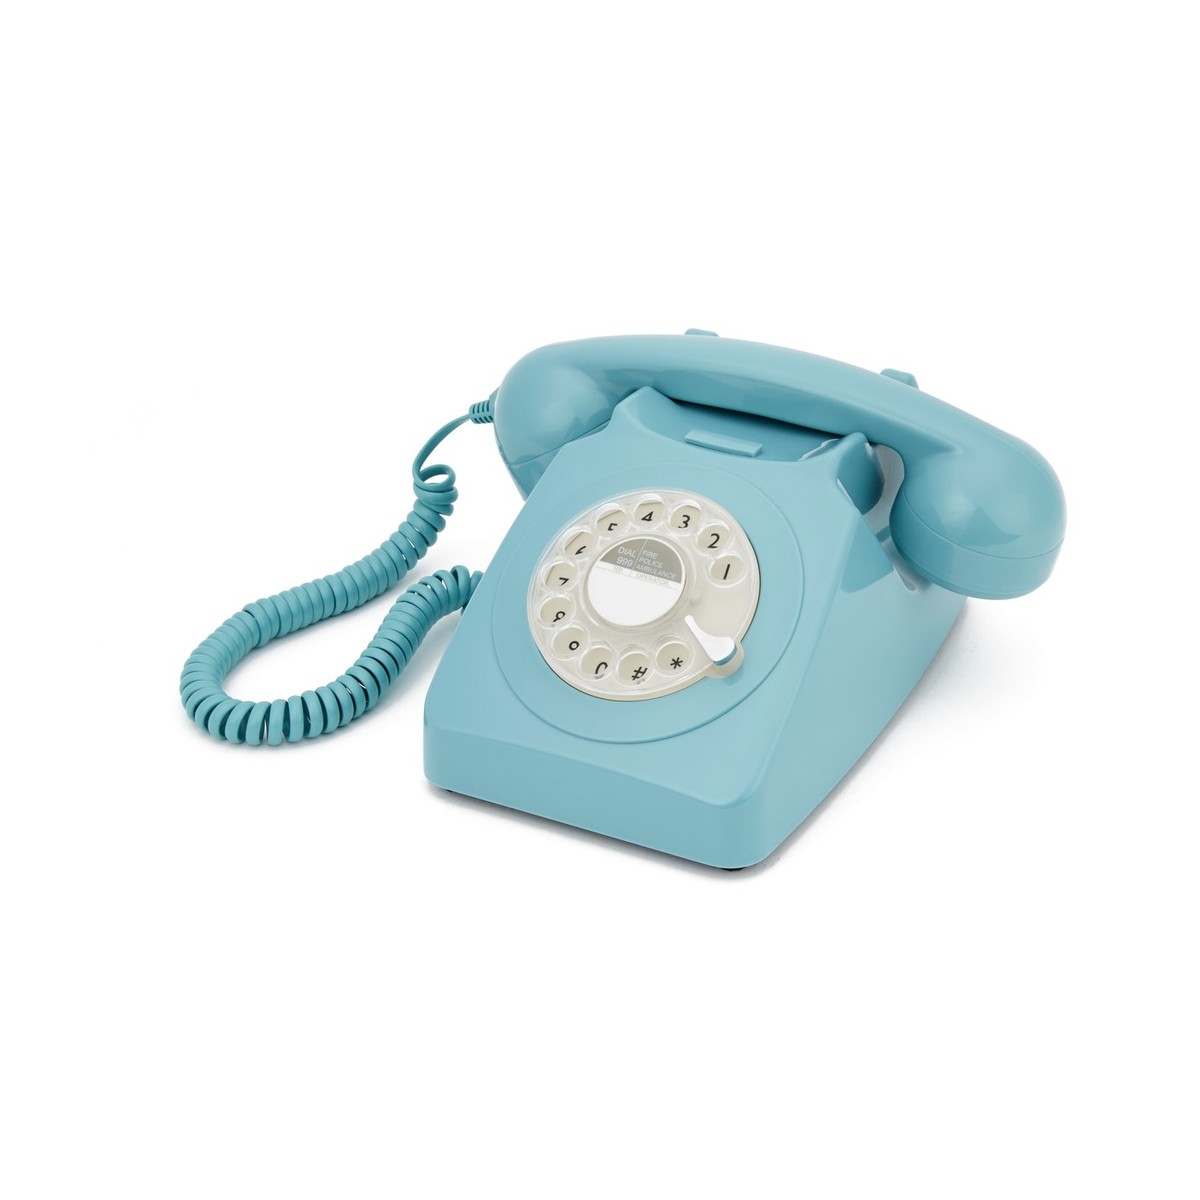 GPO - Téléphone bleu rétro 746